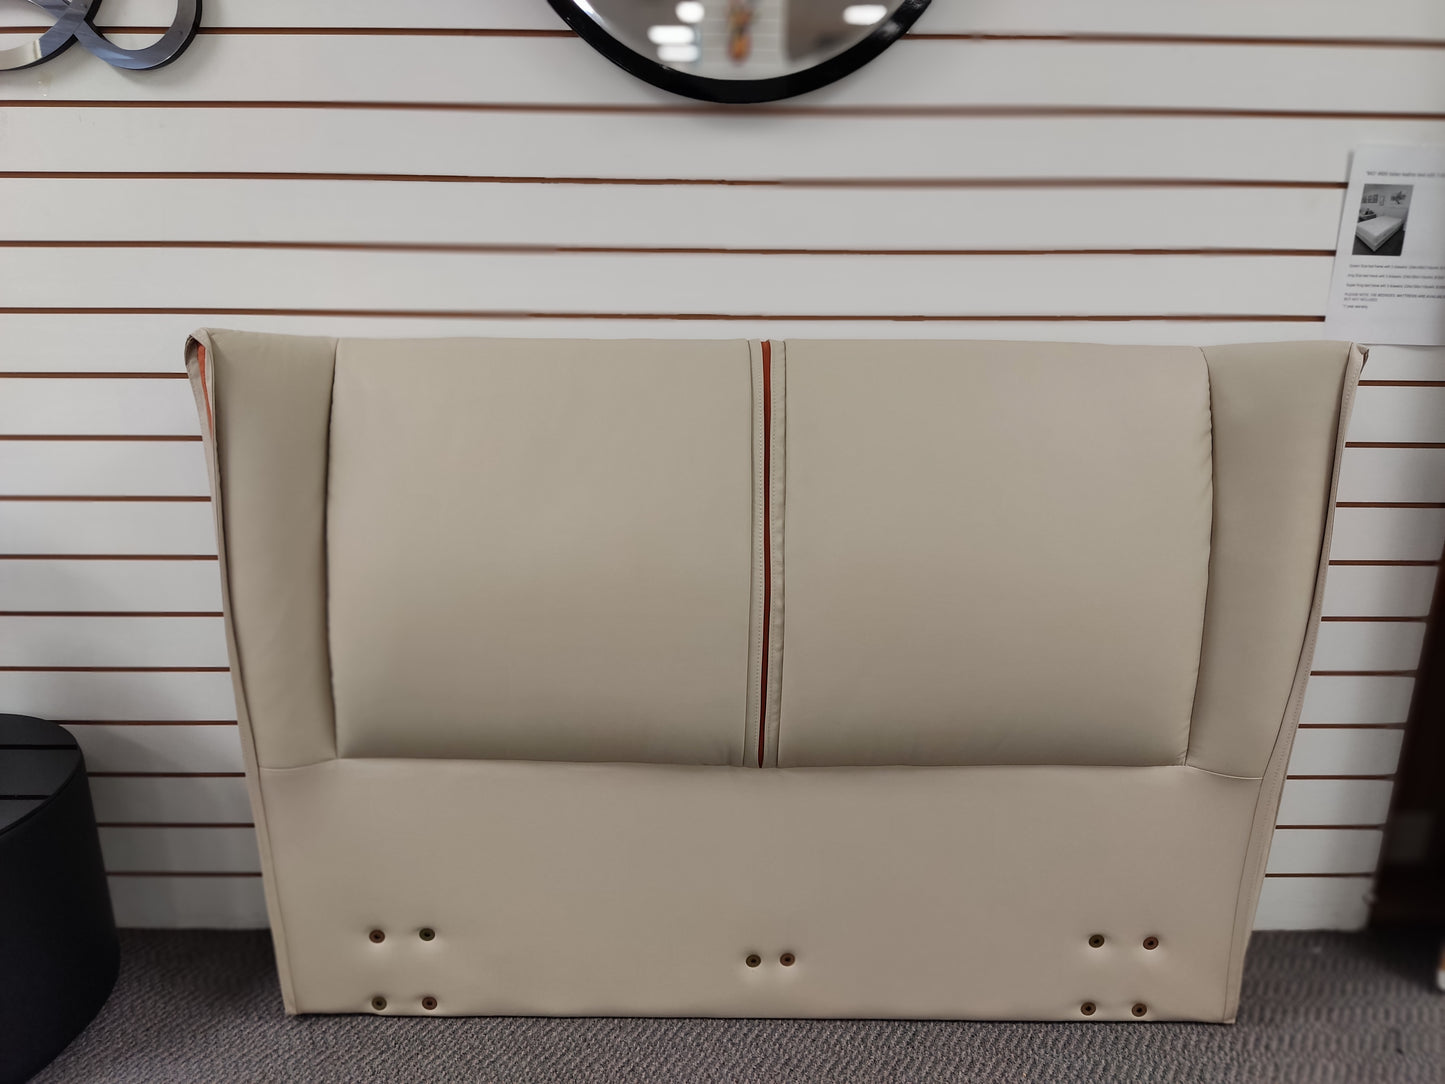 Italian Design Geniune Leather Bed Frame #2063, 3 sizes in stock